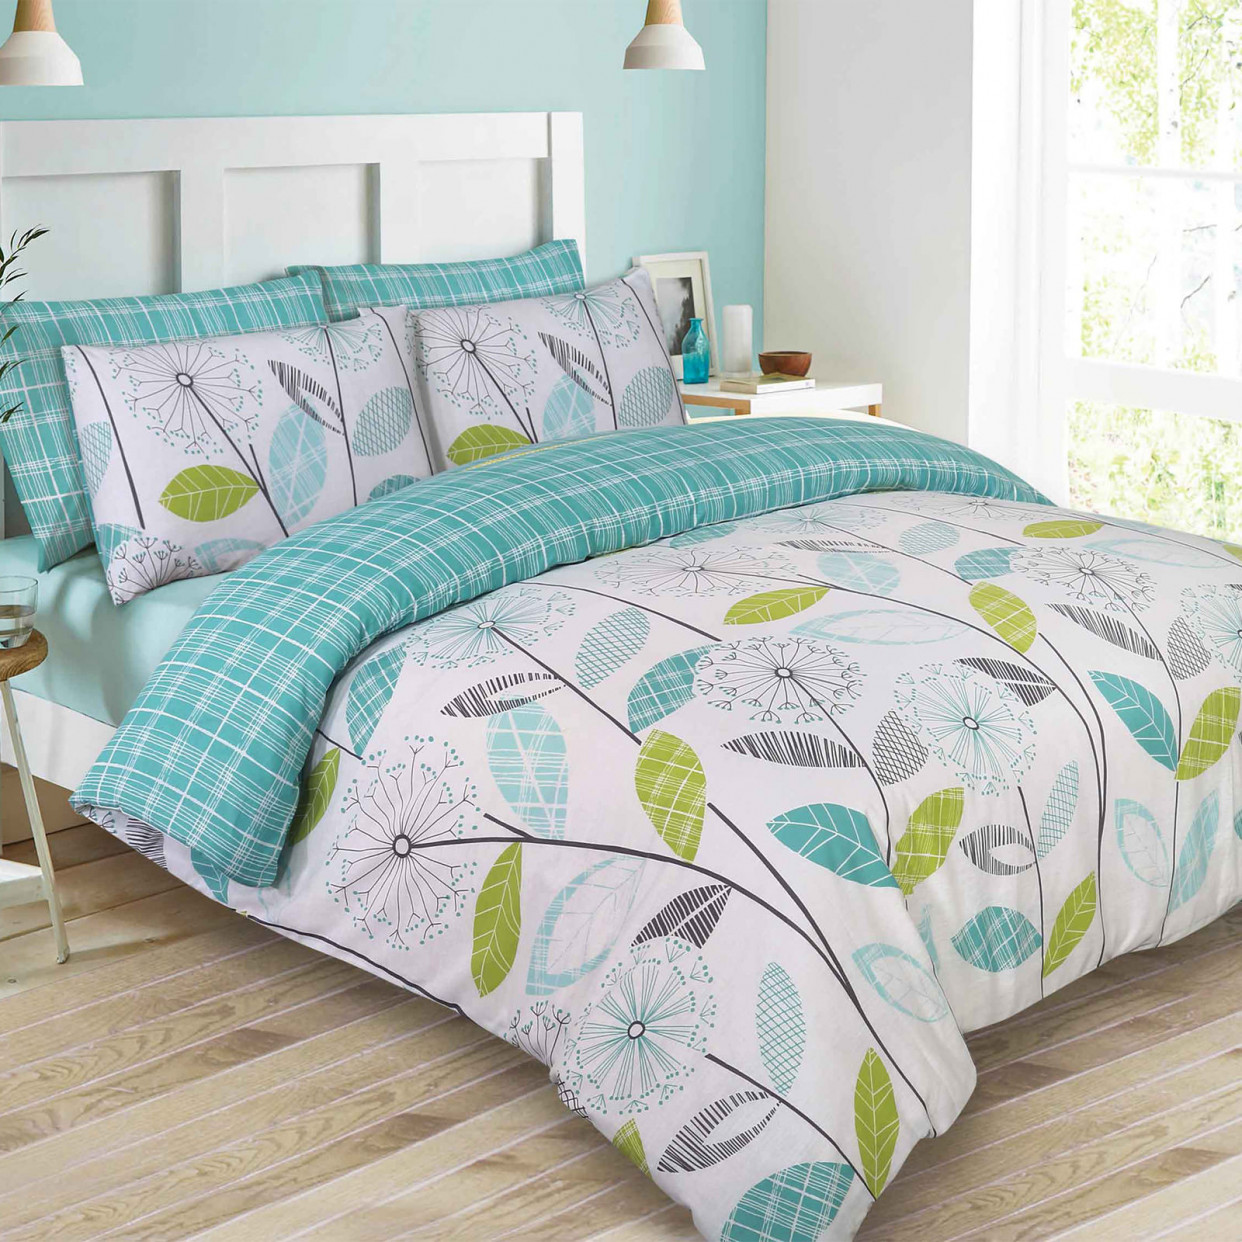 Dreamscene Allium Floral Tartan Check Bedding Double Duvet Cover Set - Teal/Green>